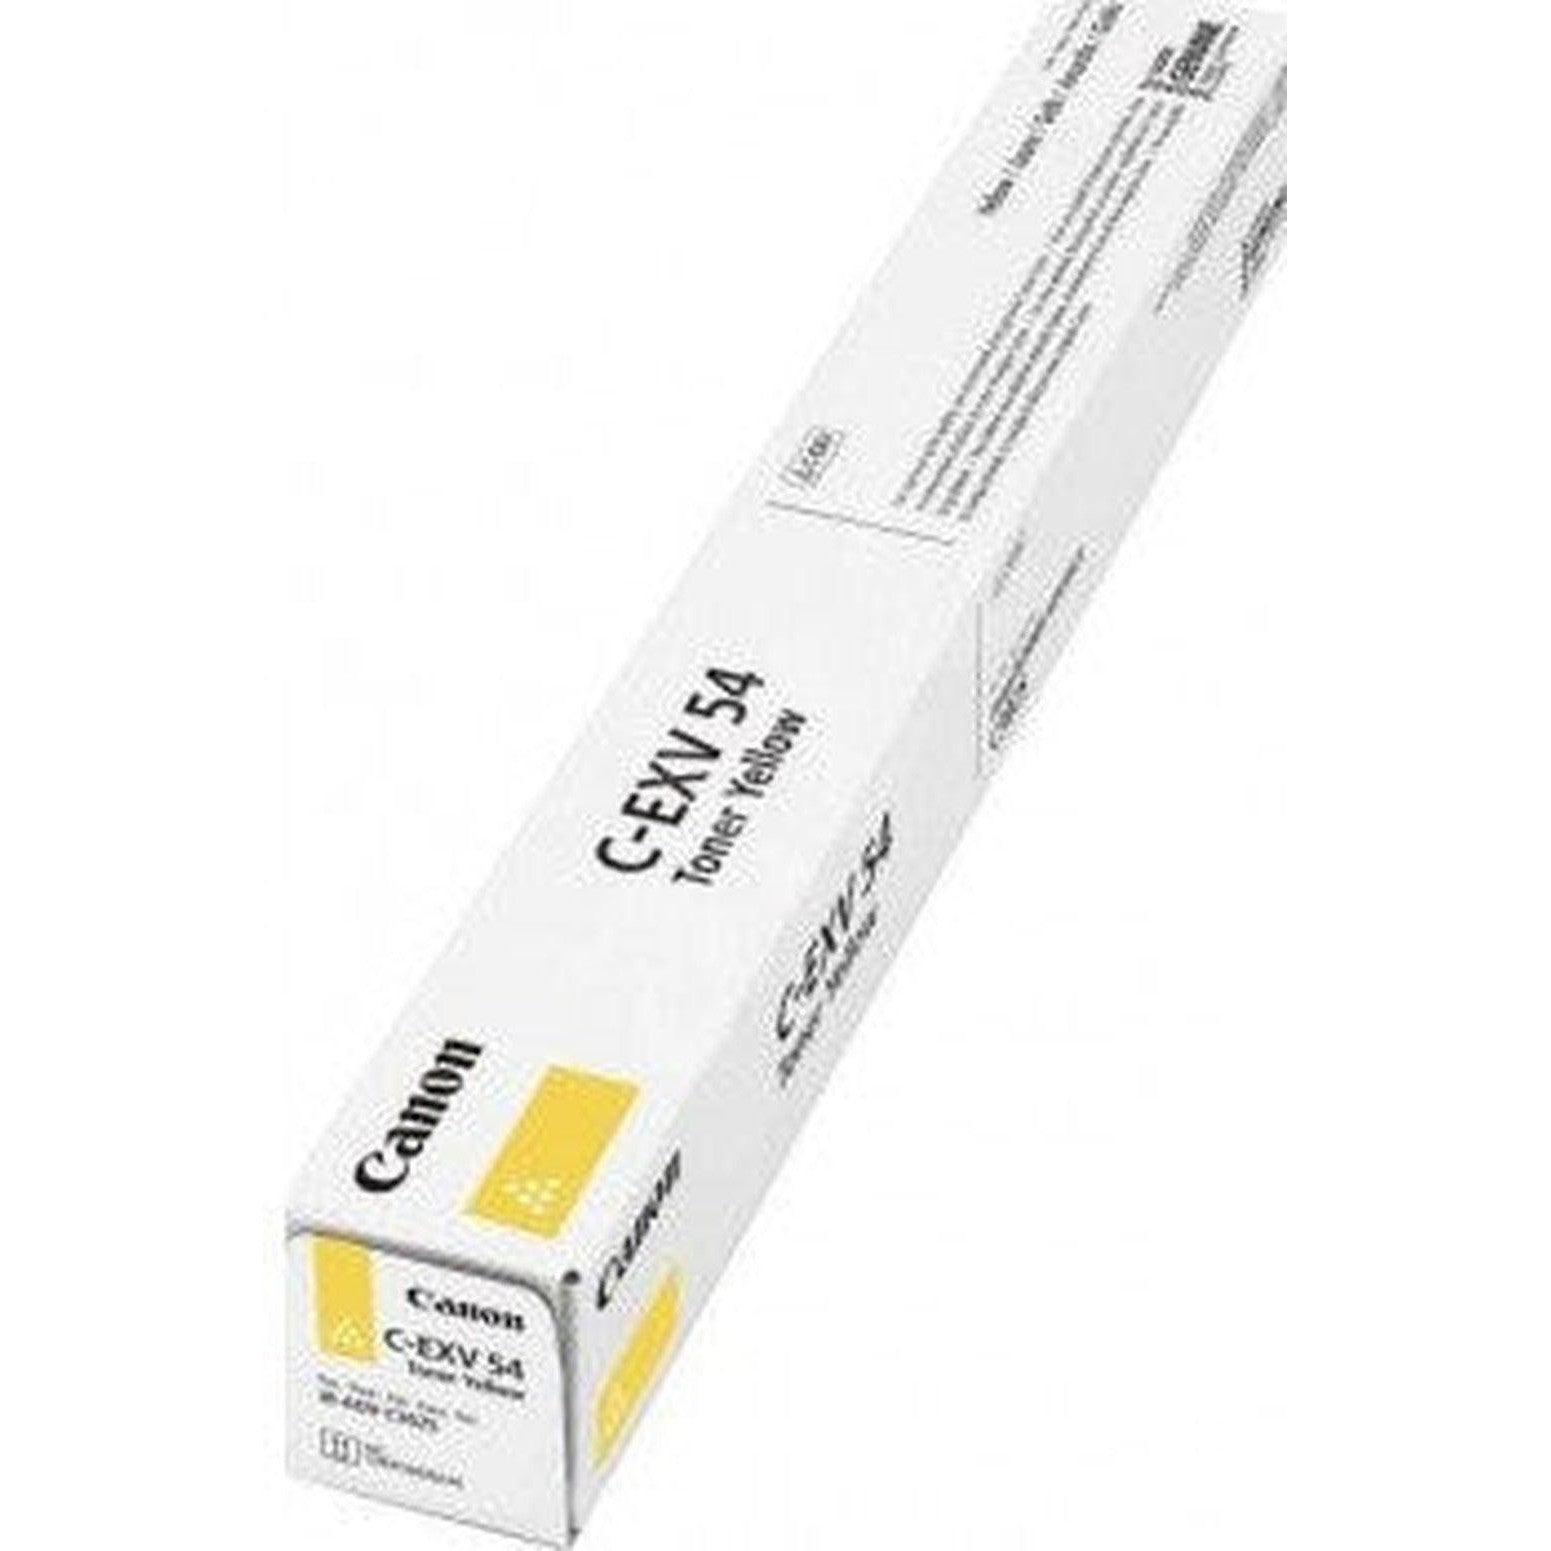 Canon C Exv 54 Yellow Toner-Inks And Toners-Canon-Star Light Kuwait